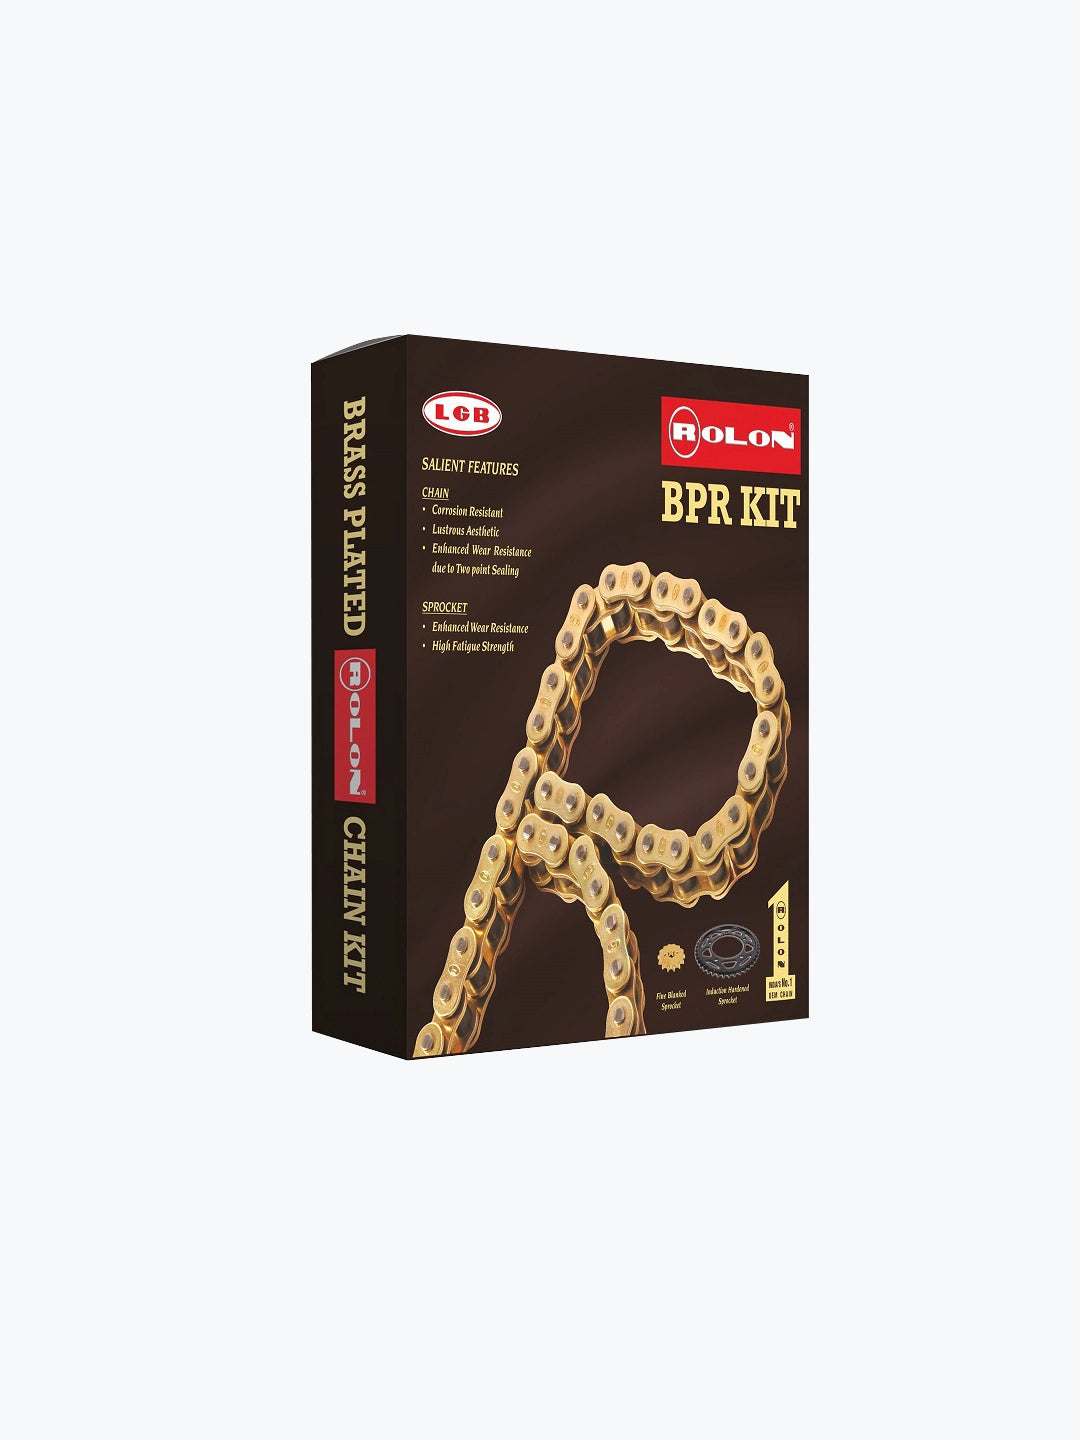 Rolon Brass Chain Sprocket Kit 326 For R15 V3